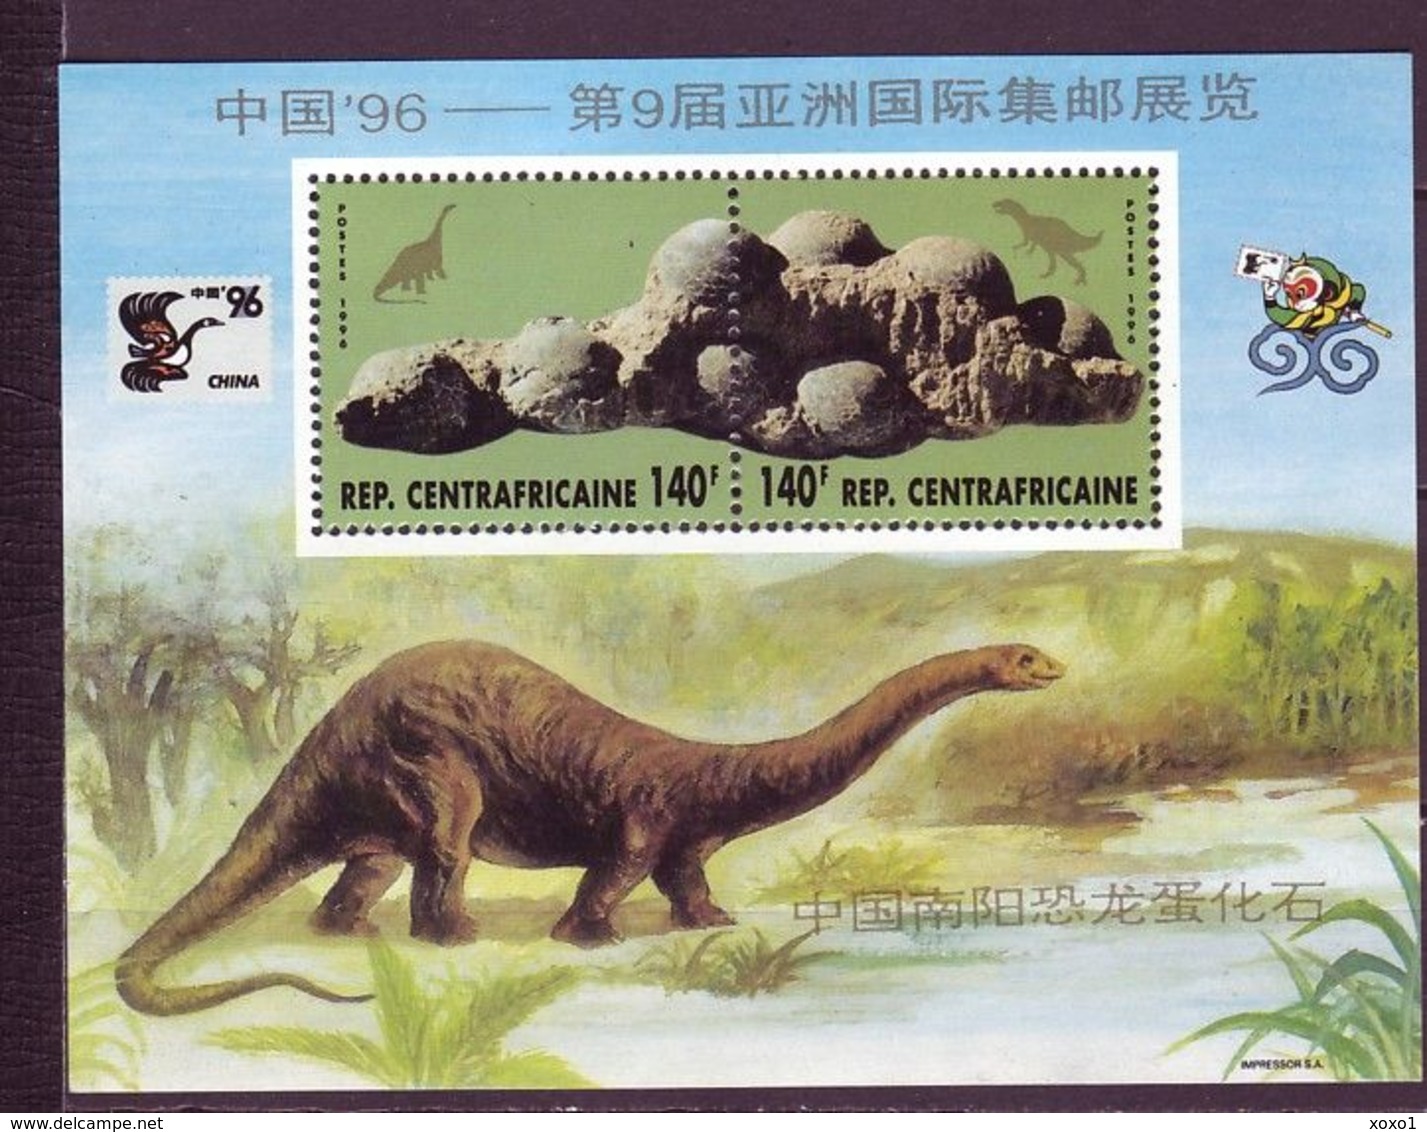 Central African Republic 1996 MiNr. Block 578 Prehistorics Dino CHINA ’96  S\sh MNH ** 3,00 € - Repubblica Centroafricana